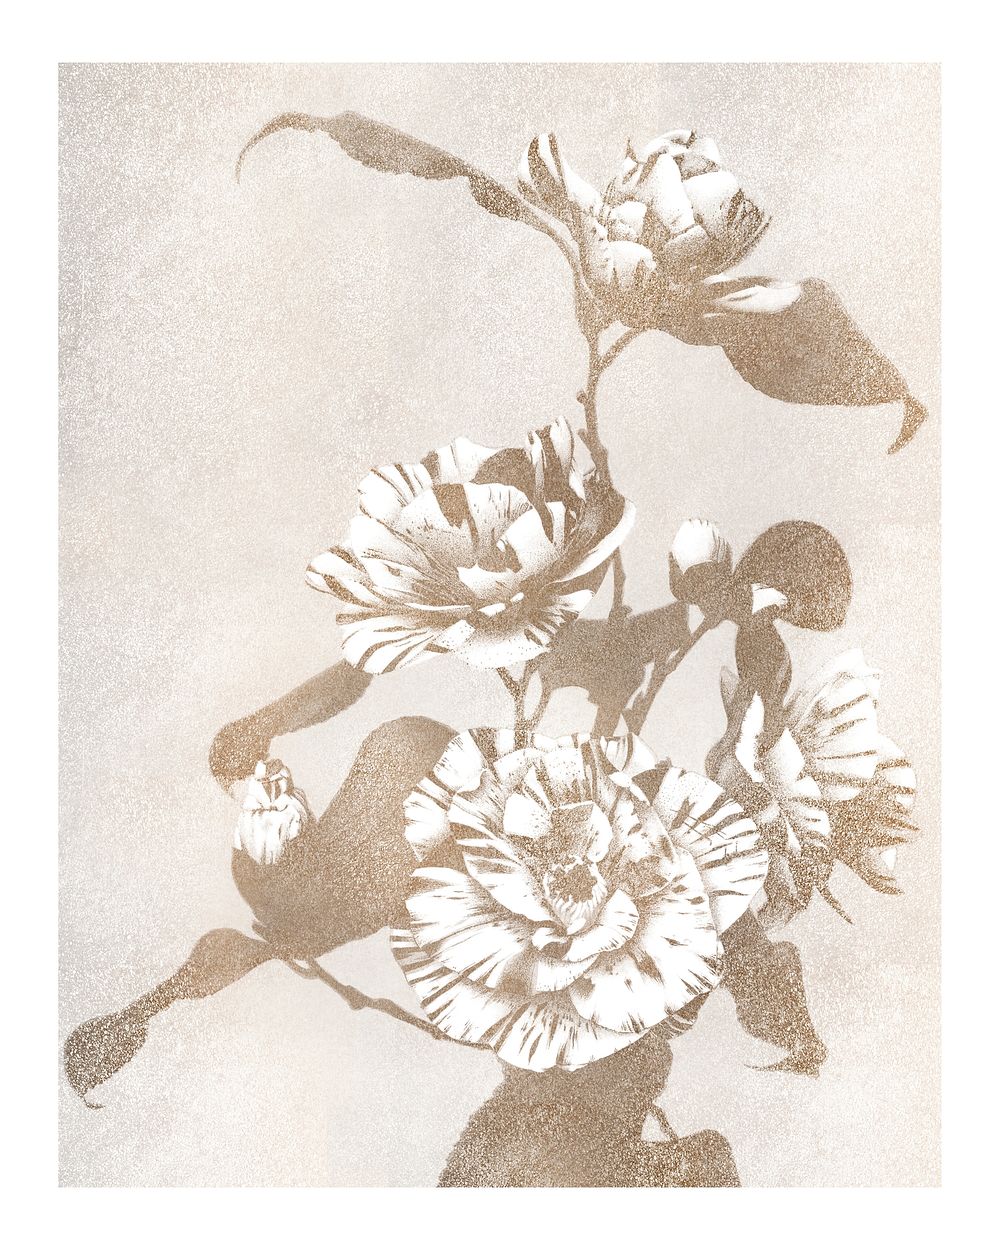 Sepia striped Camellias vintage illustration artwork, remix from original photography.